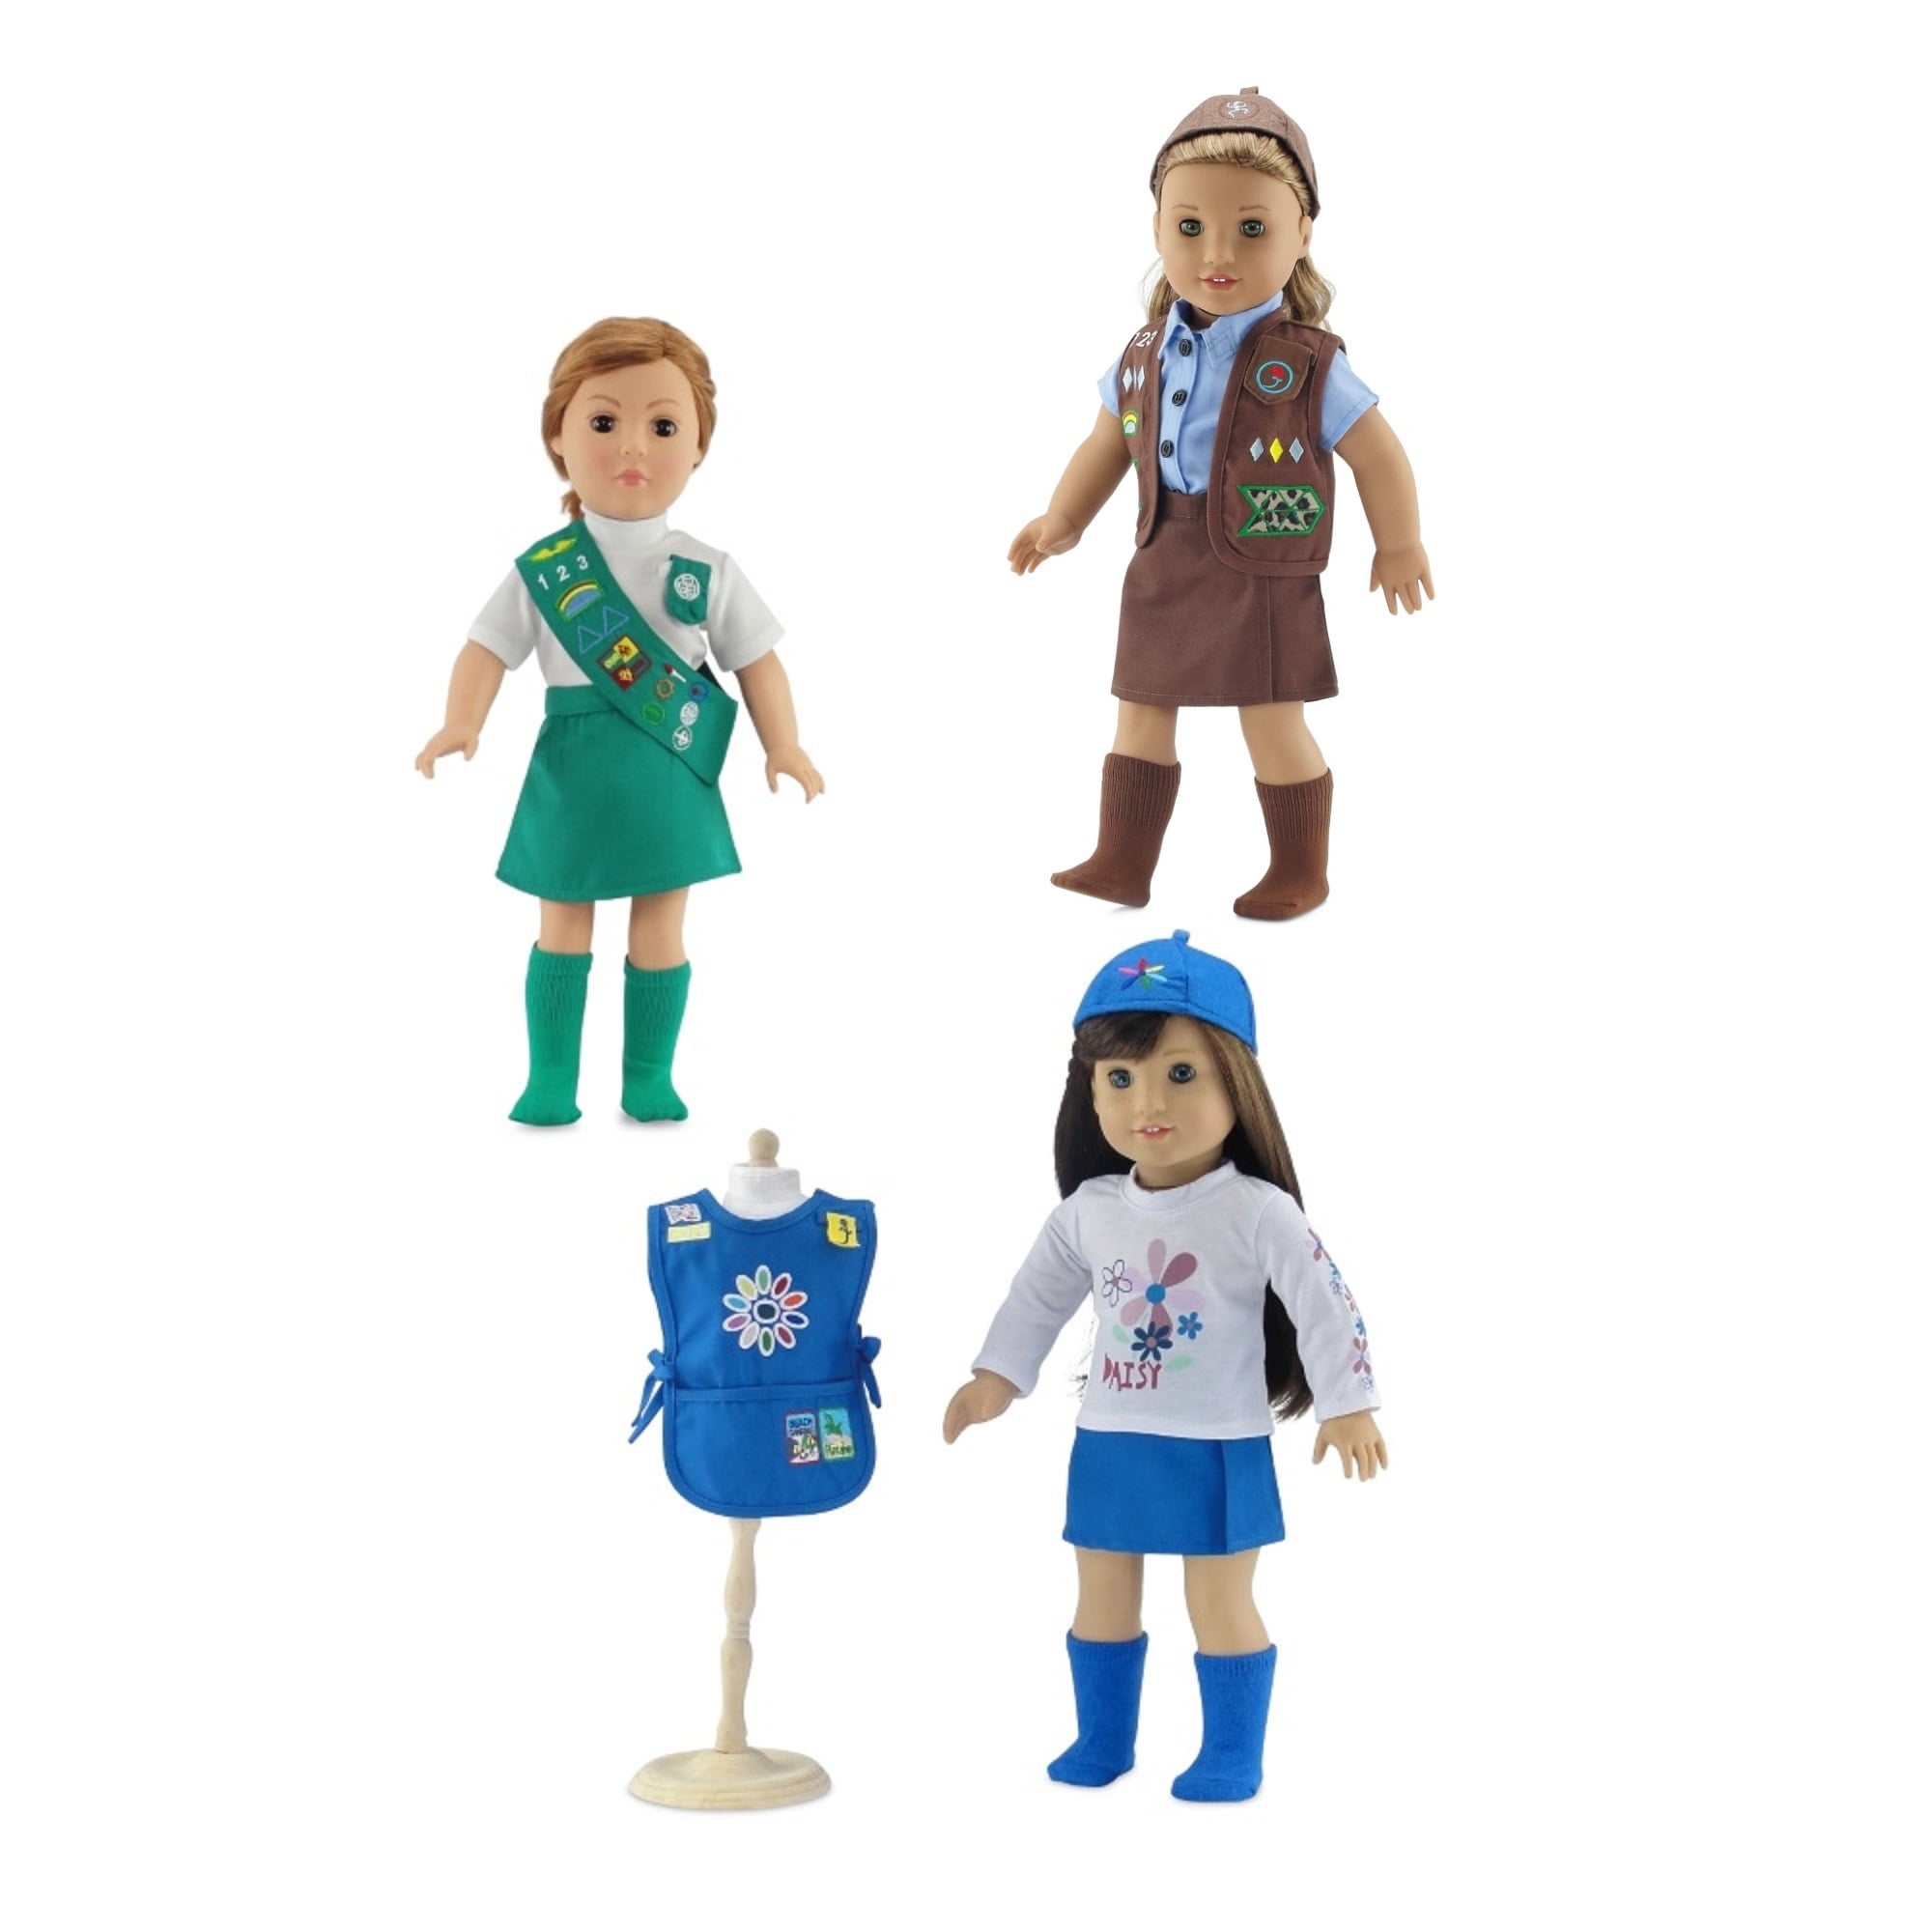 Khaki Boy Scouts Outfit for American Girl Boy Dolls